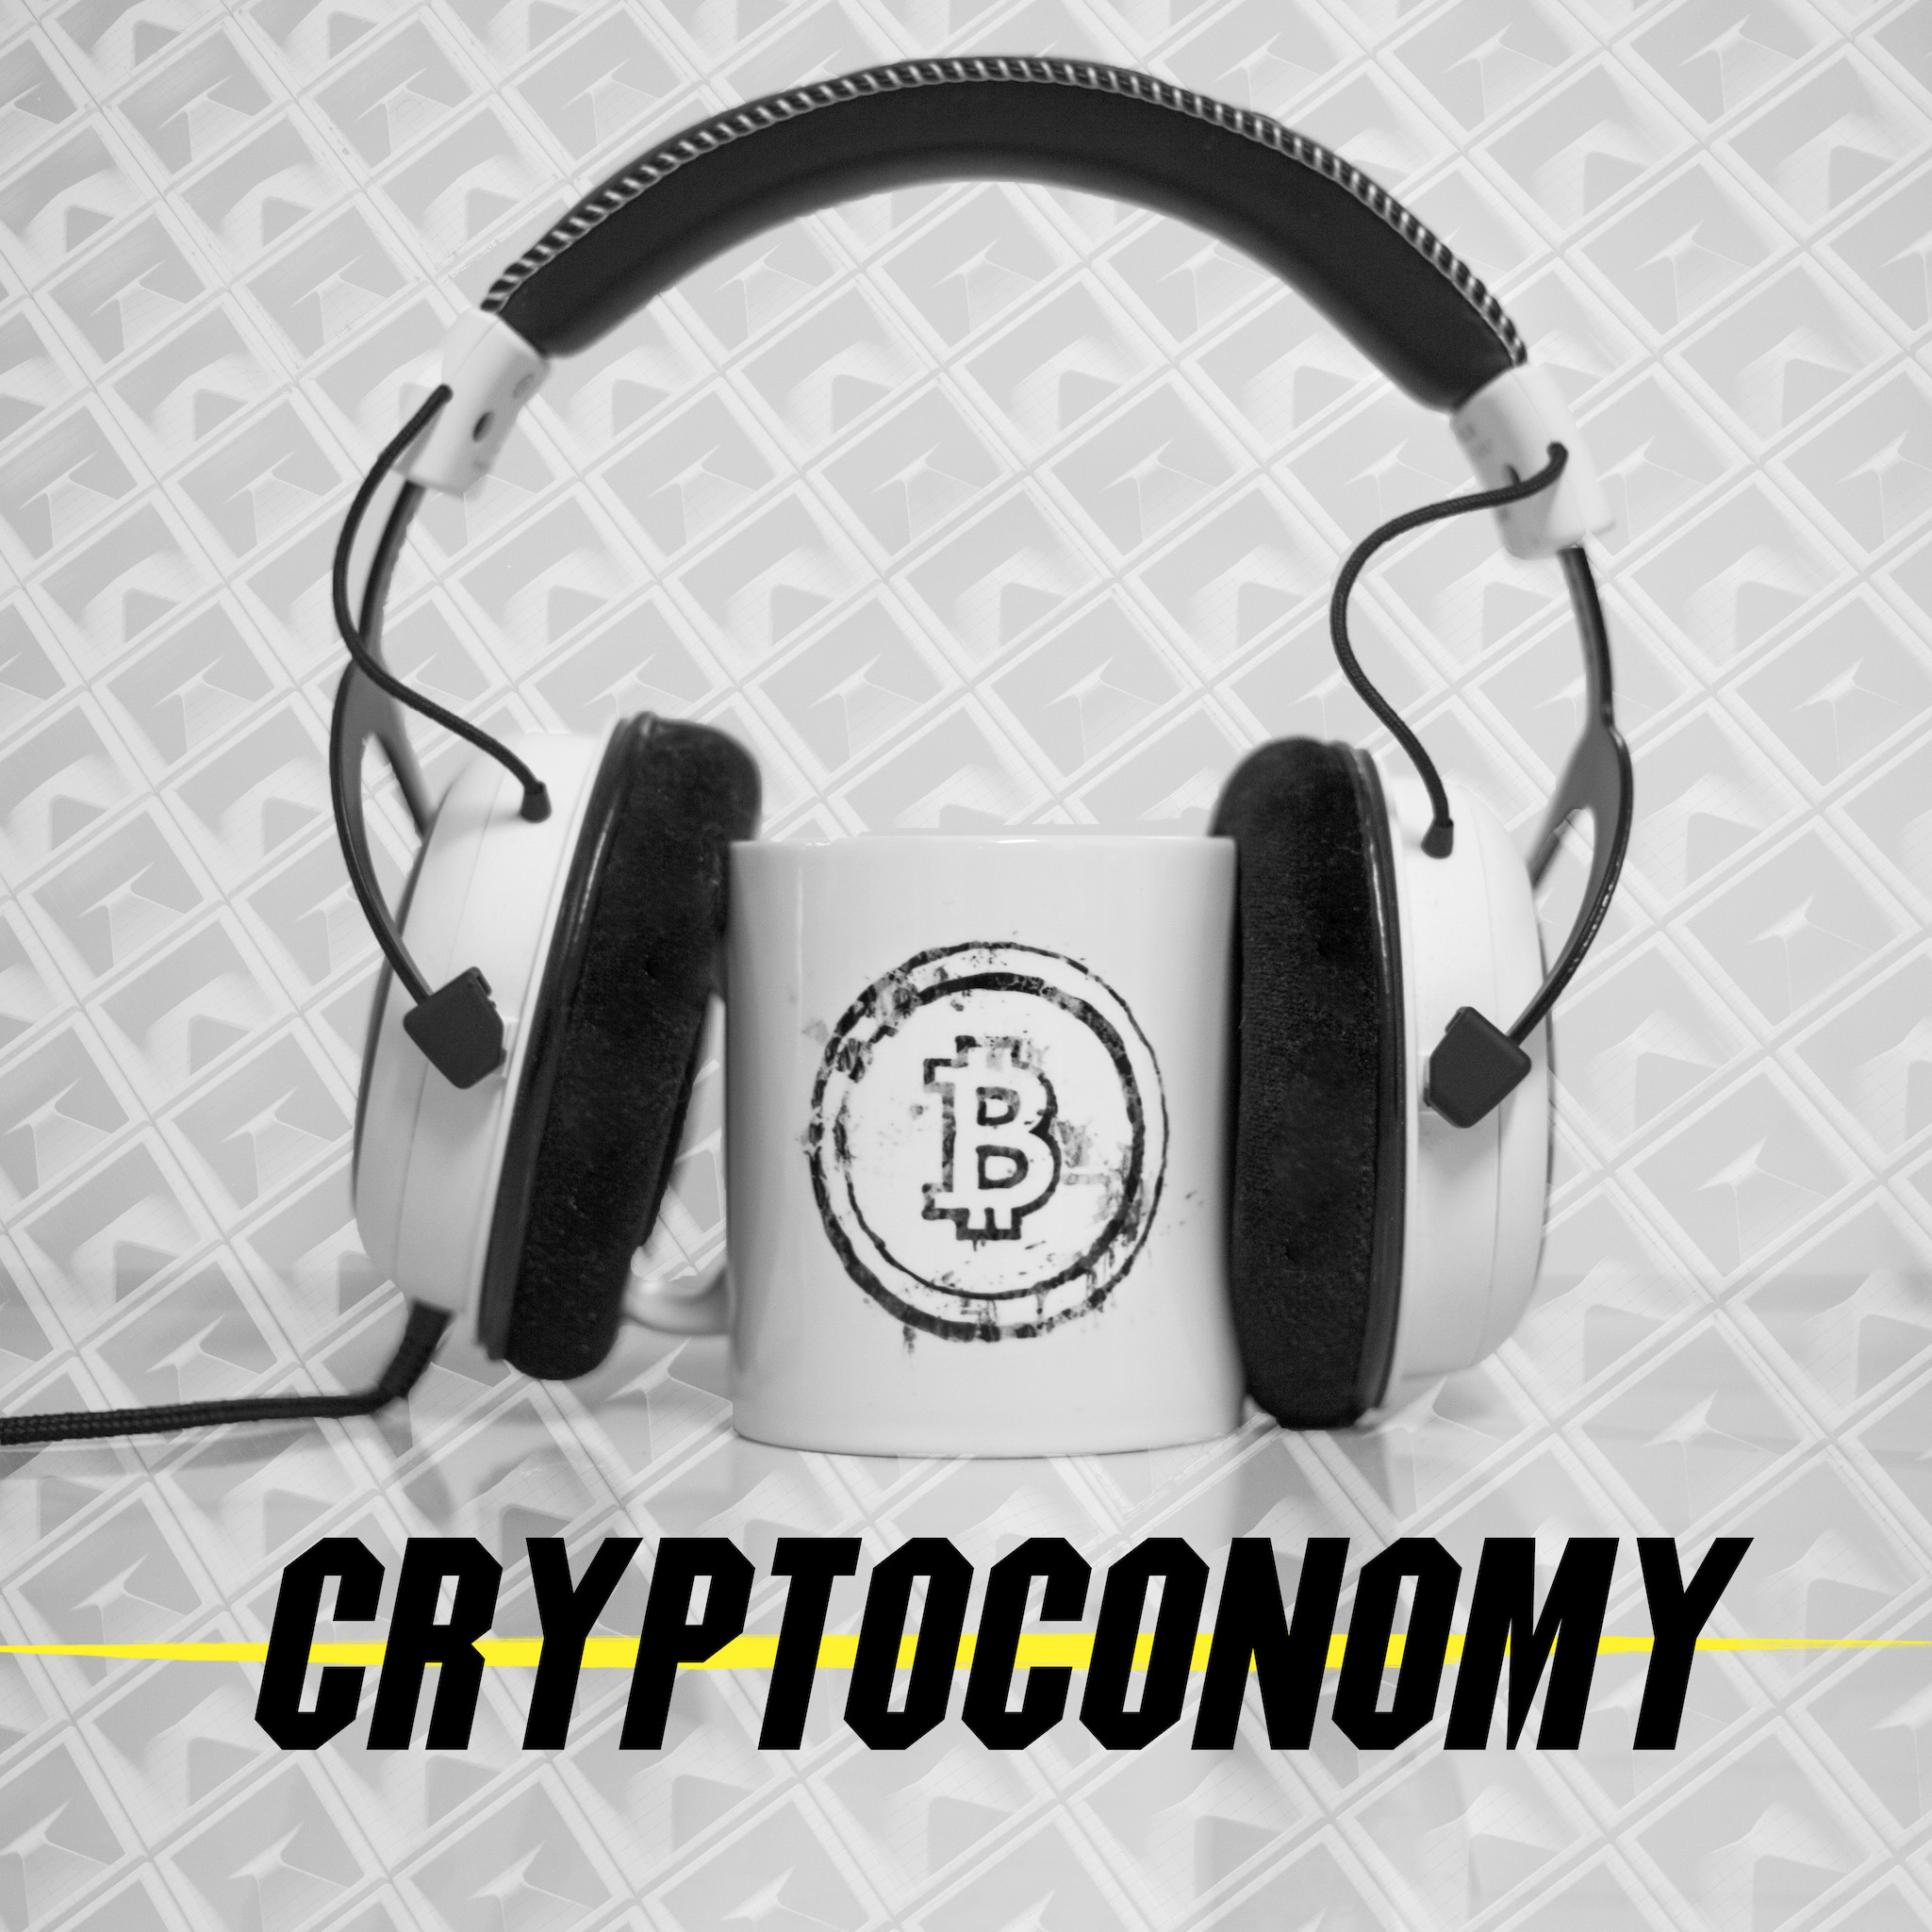 CryptoQuikRead_187 - The Cryptocurrency Phenomenon [Part 2]